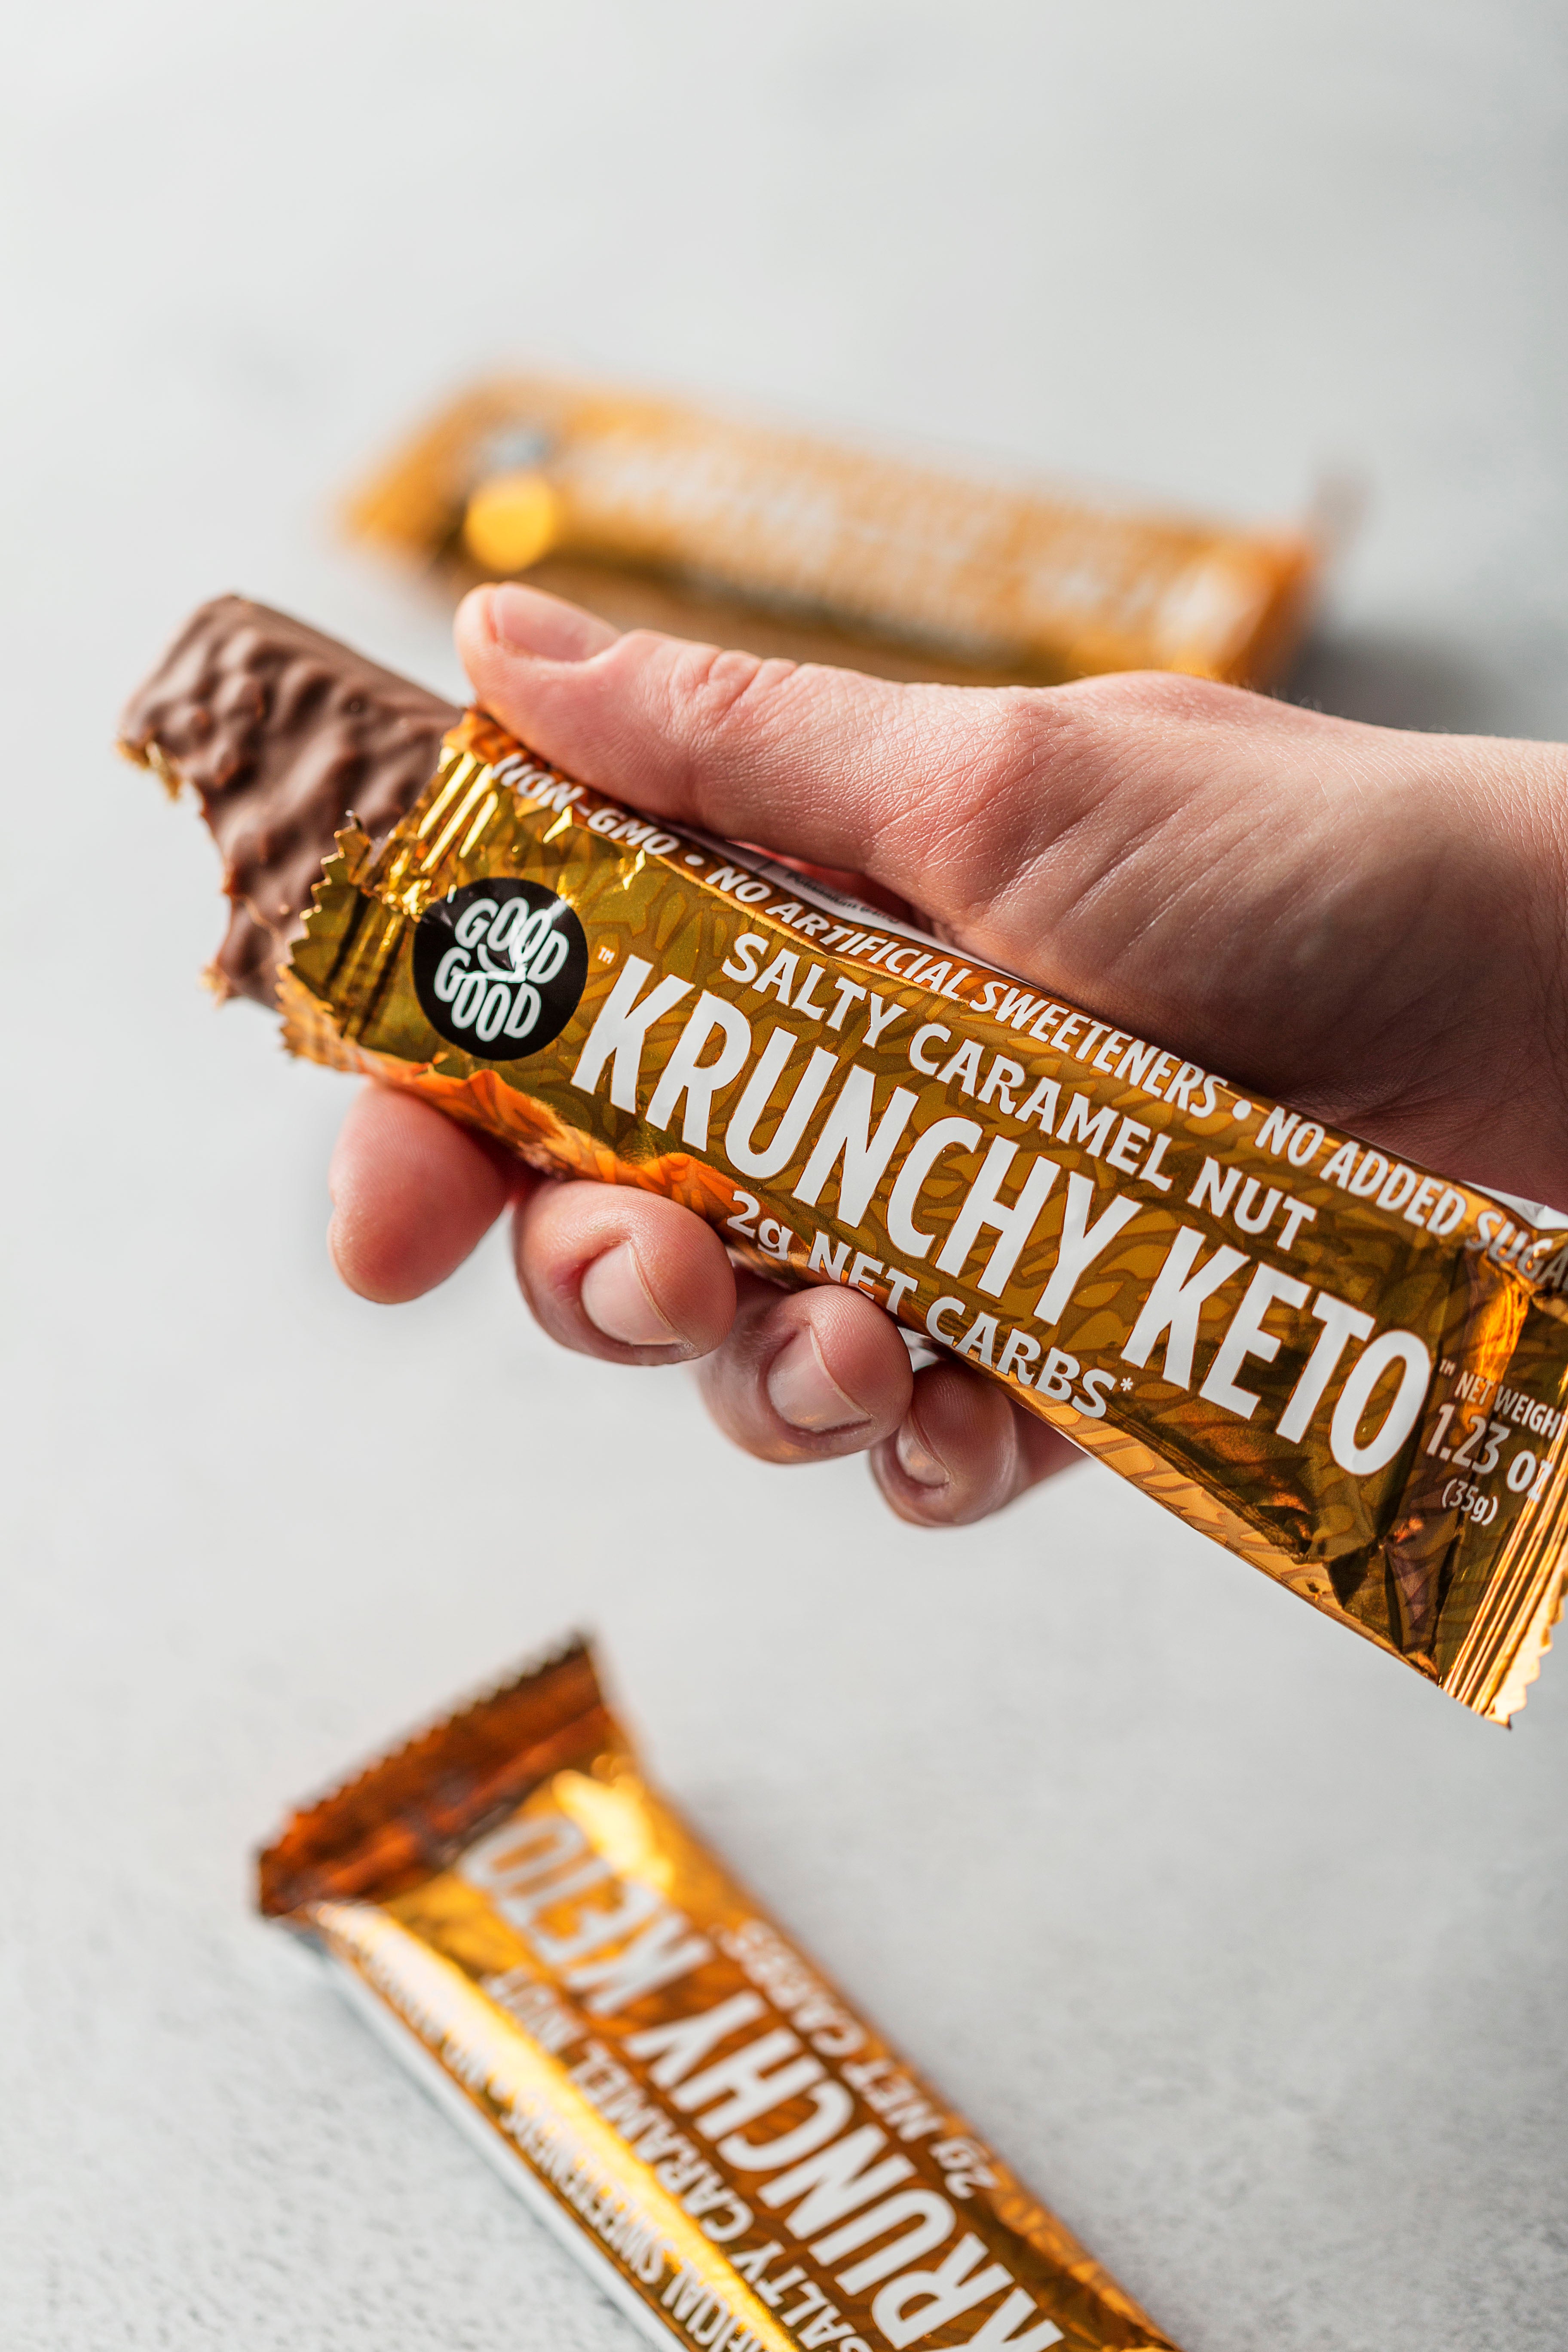 Krunchy Keto - Salty Caramel Nut Bar - Good Good